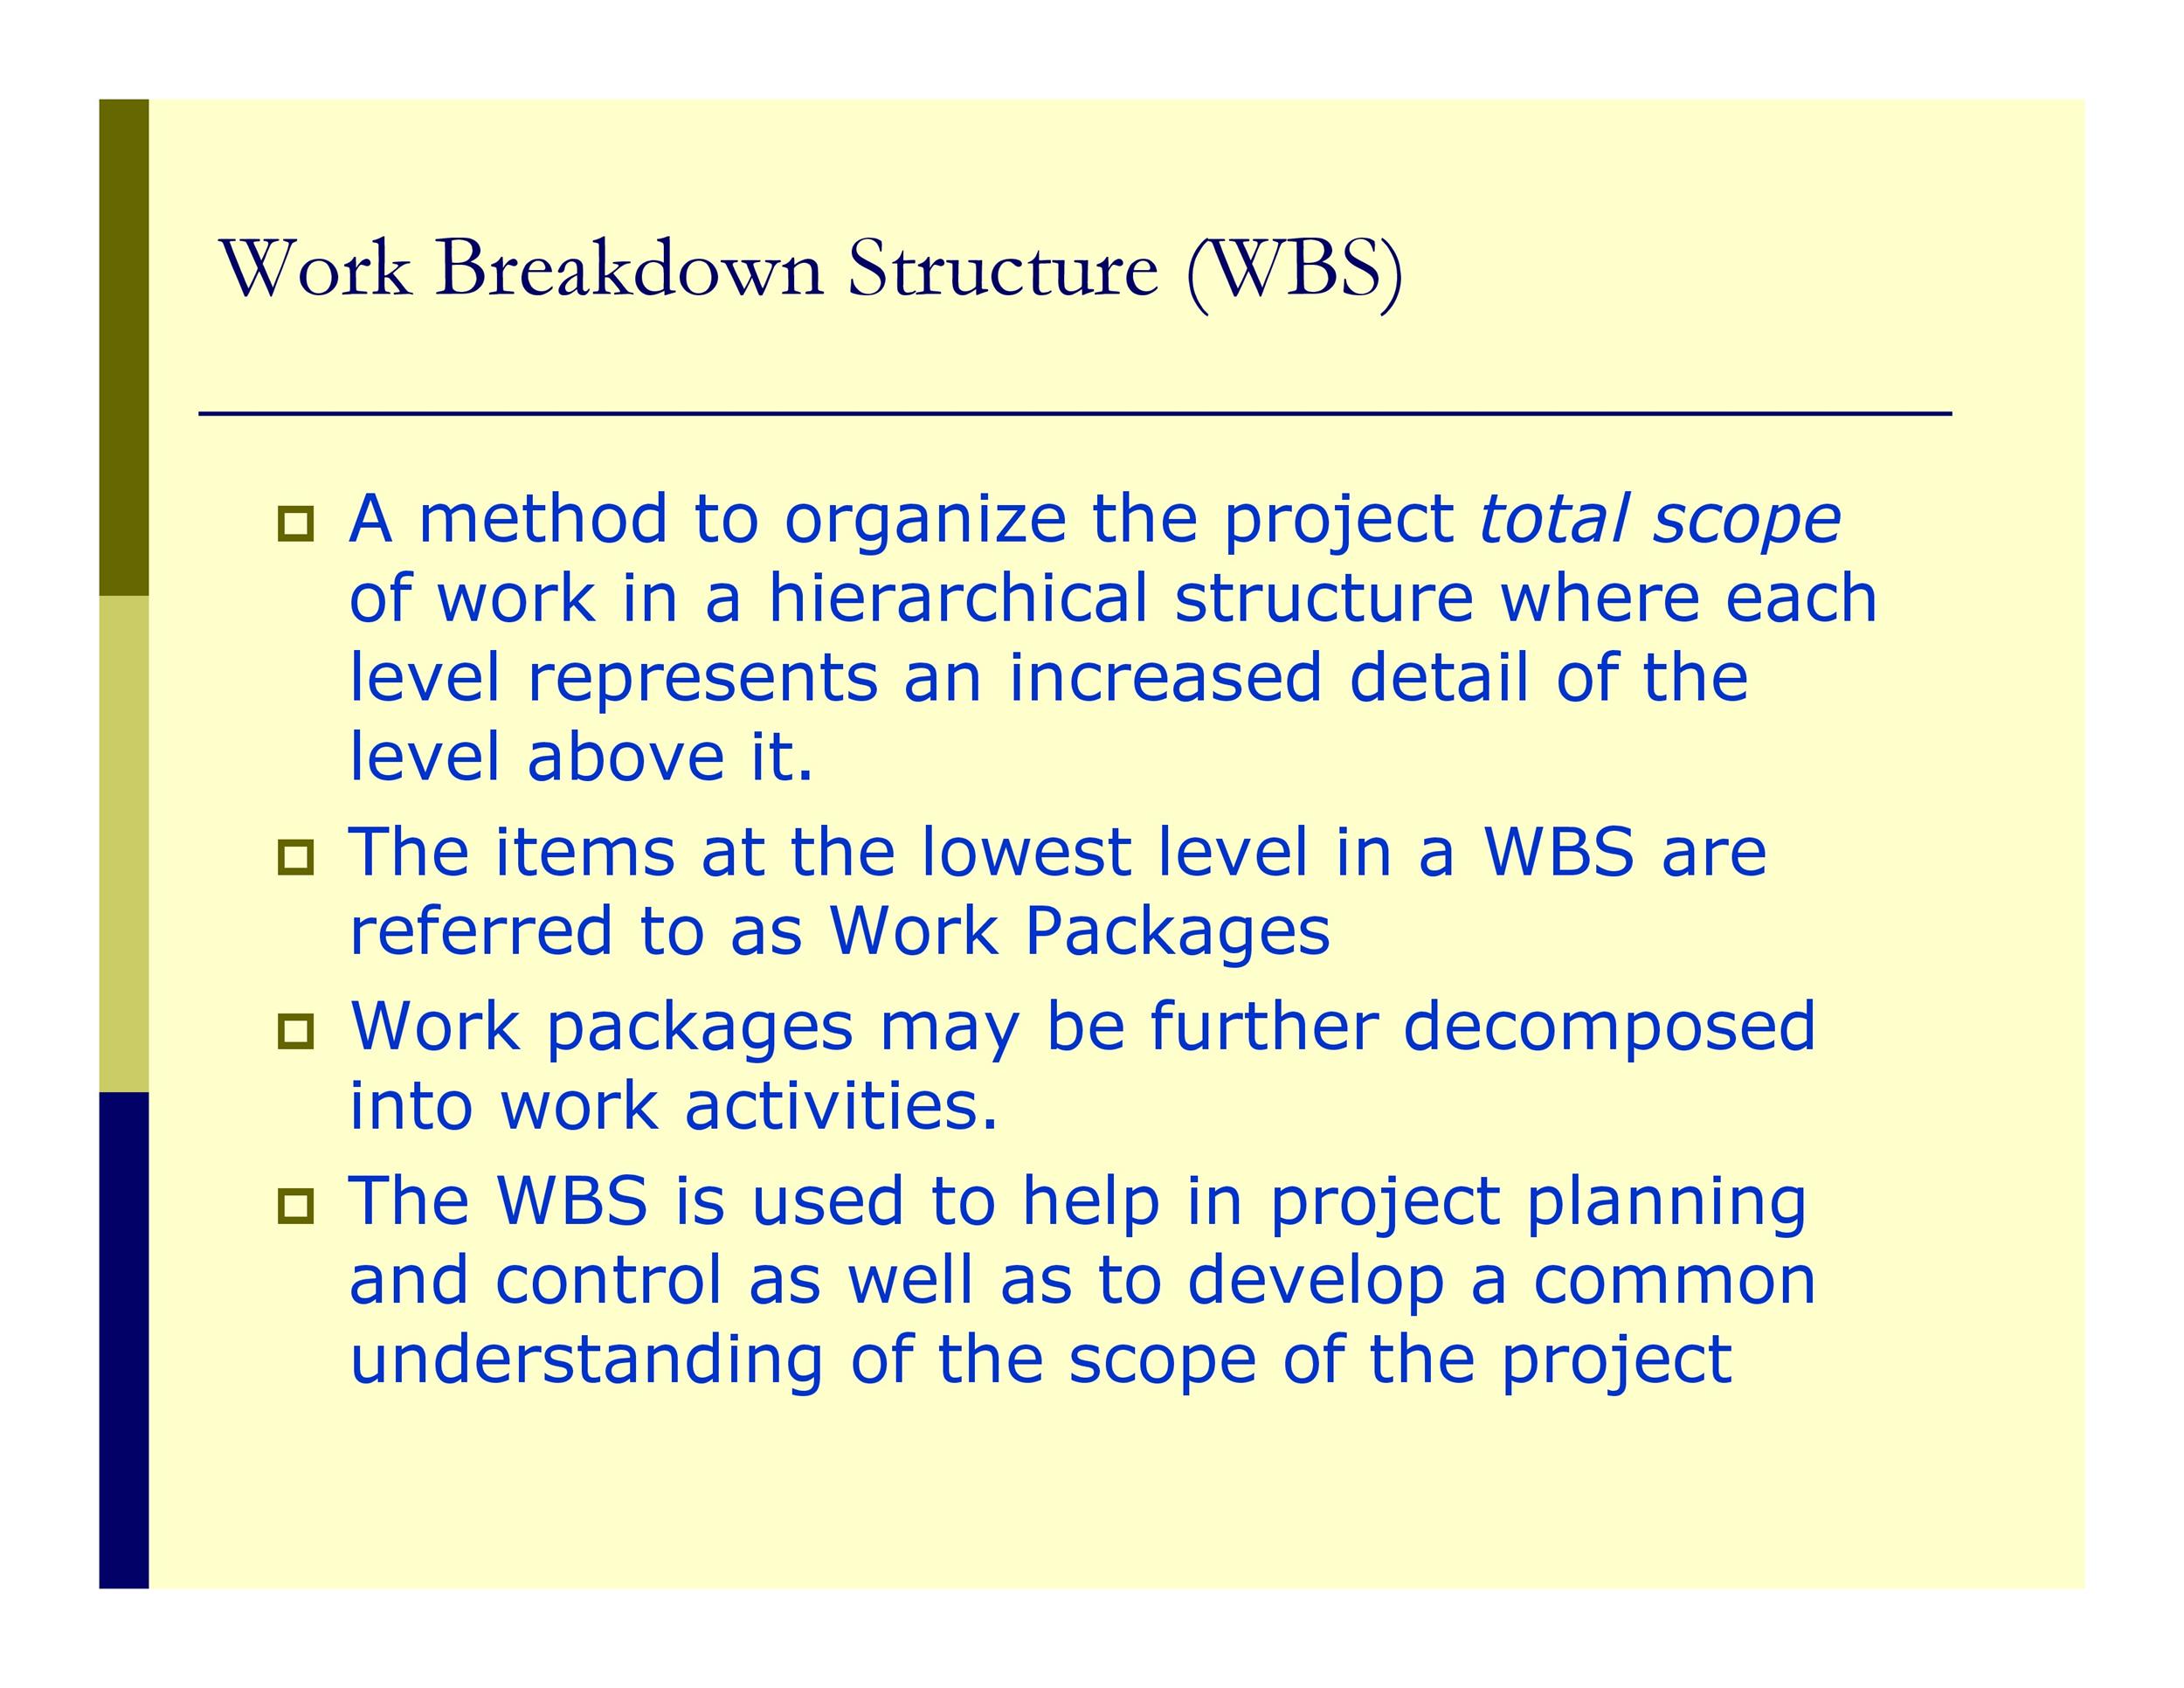 Free work breakdown structure template 39